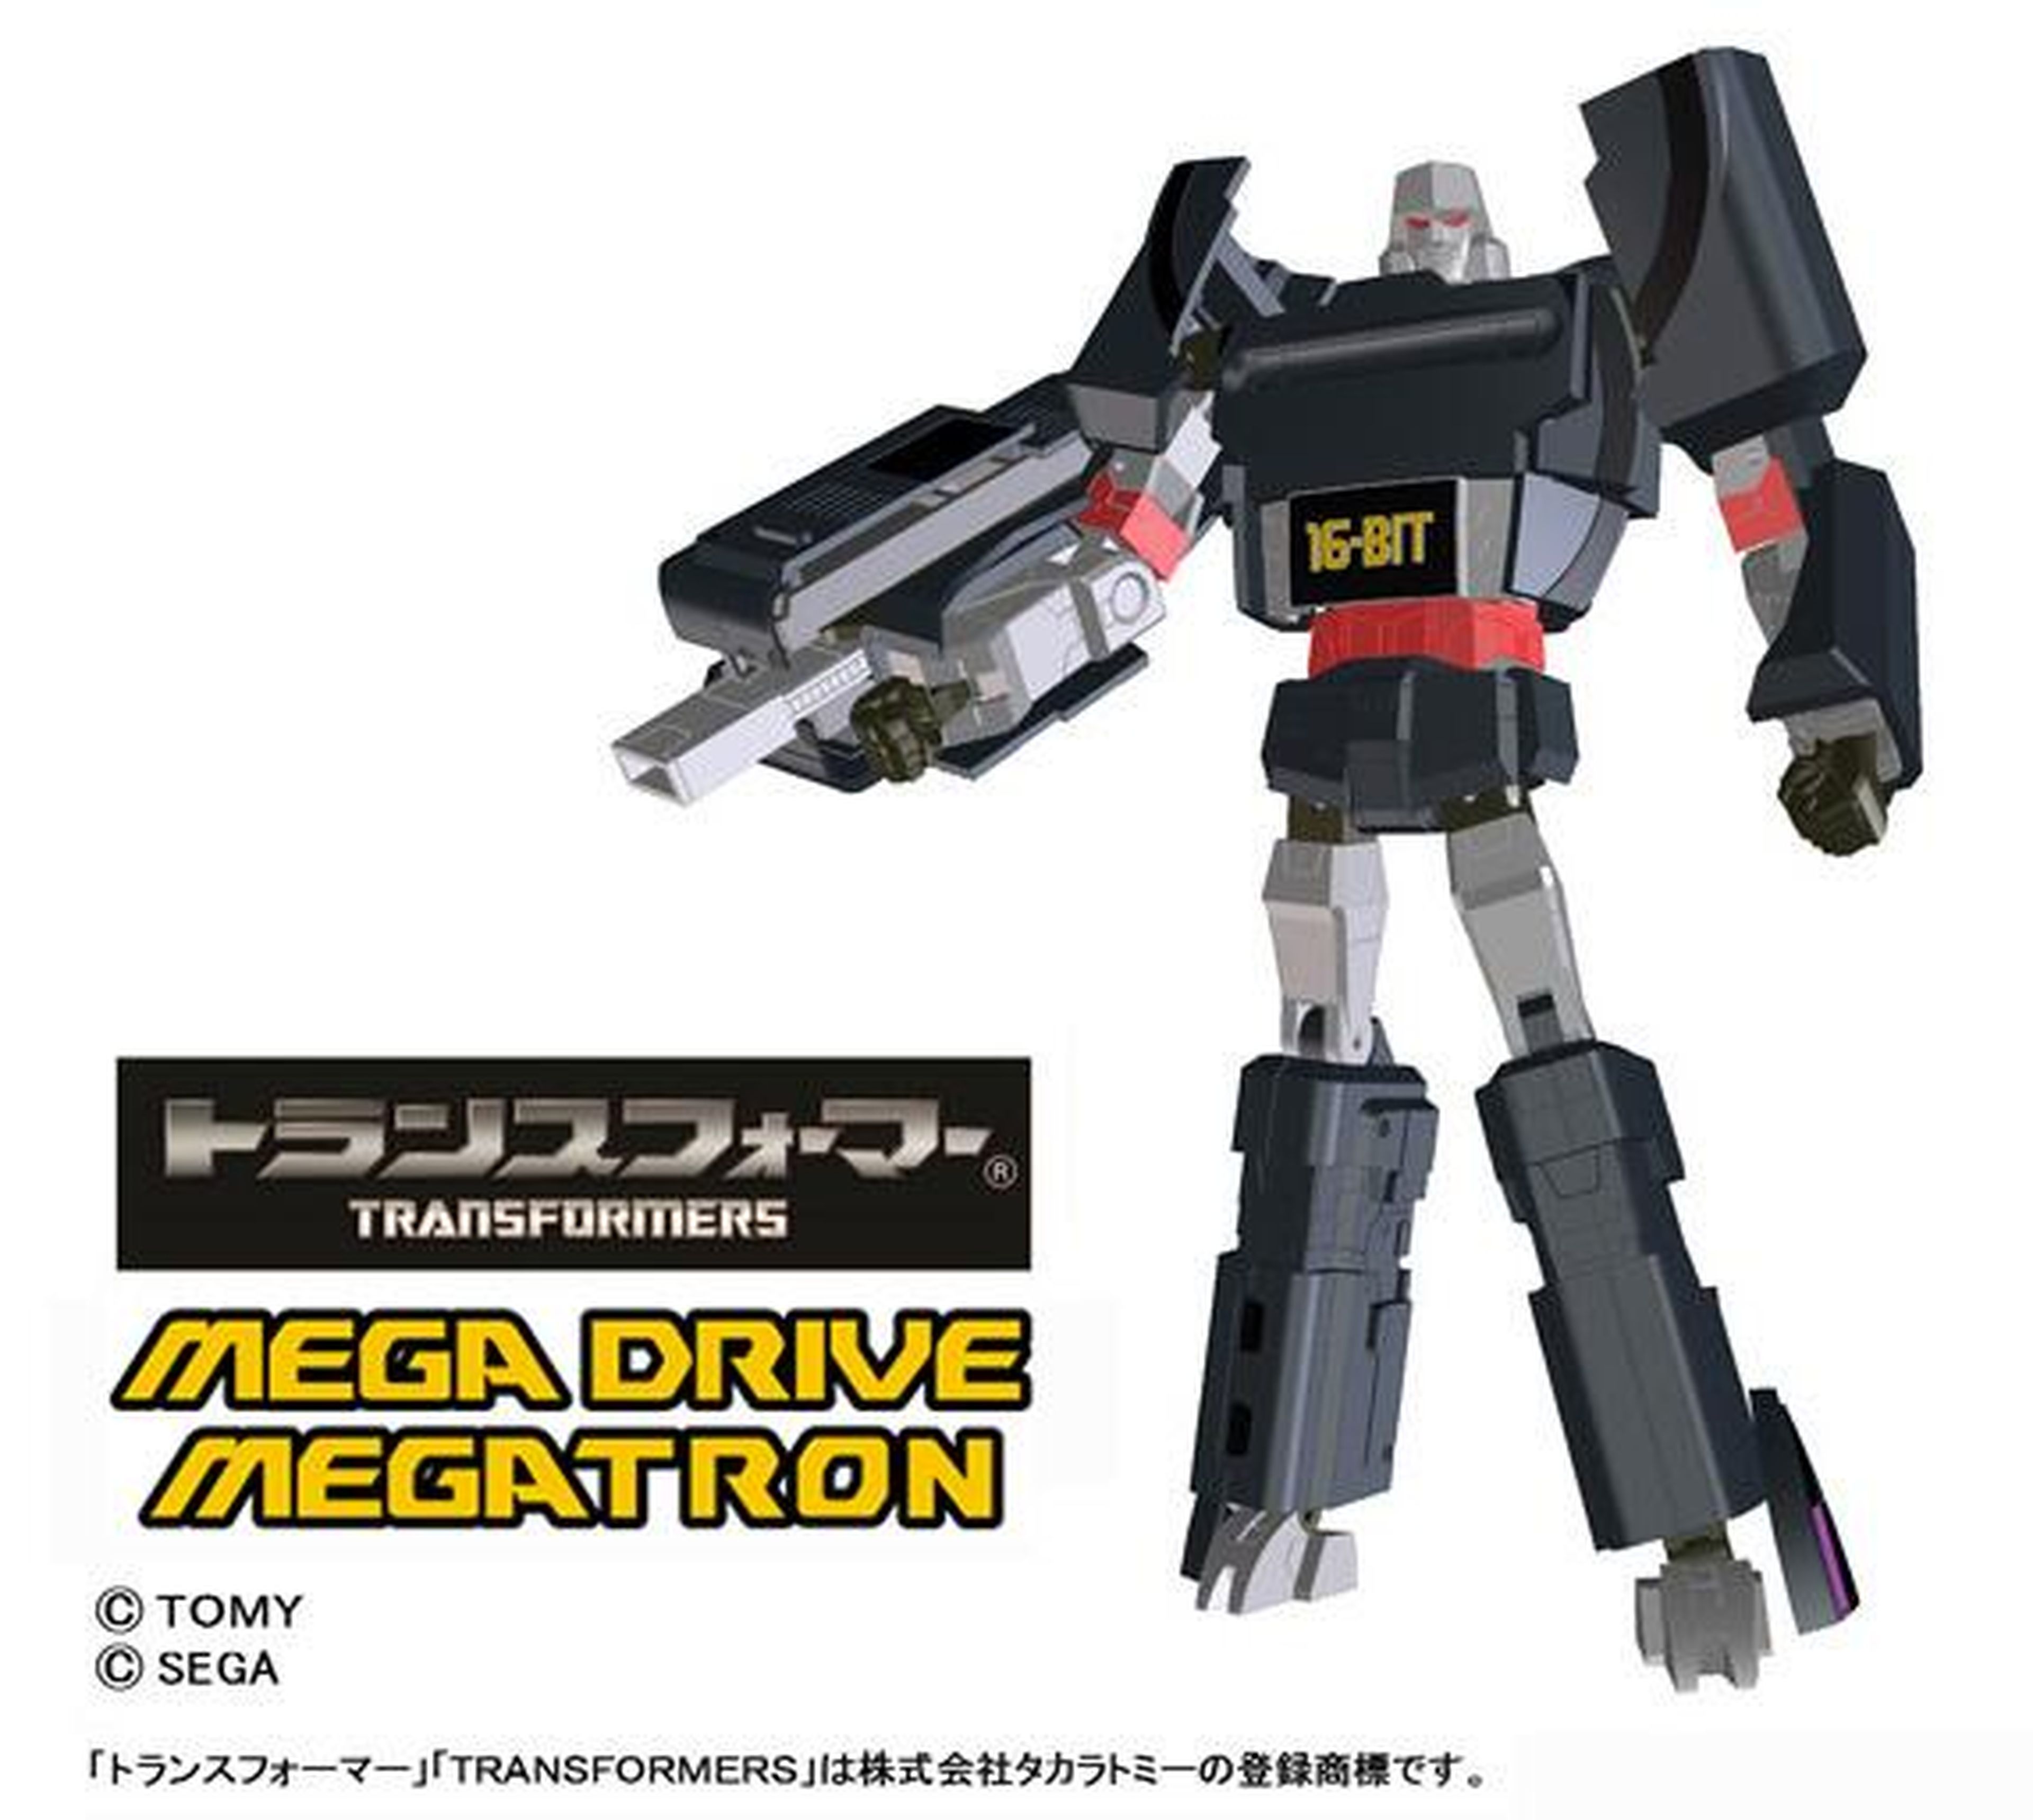 Figura de Megatron edición Mega Drive